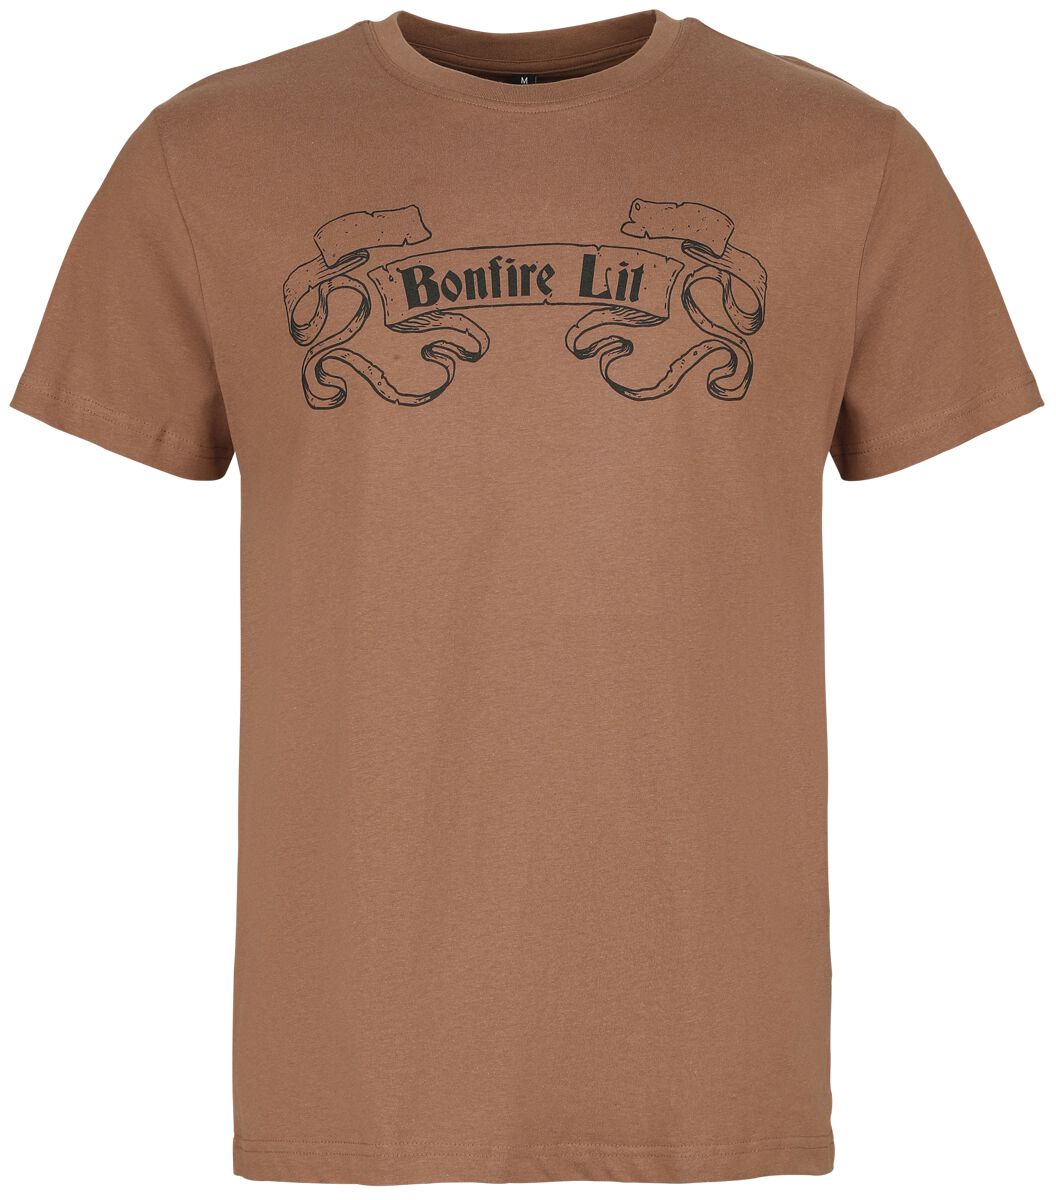 Dark Souls Bonfire Lit T-Shirt braun in M